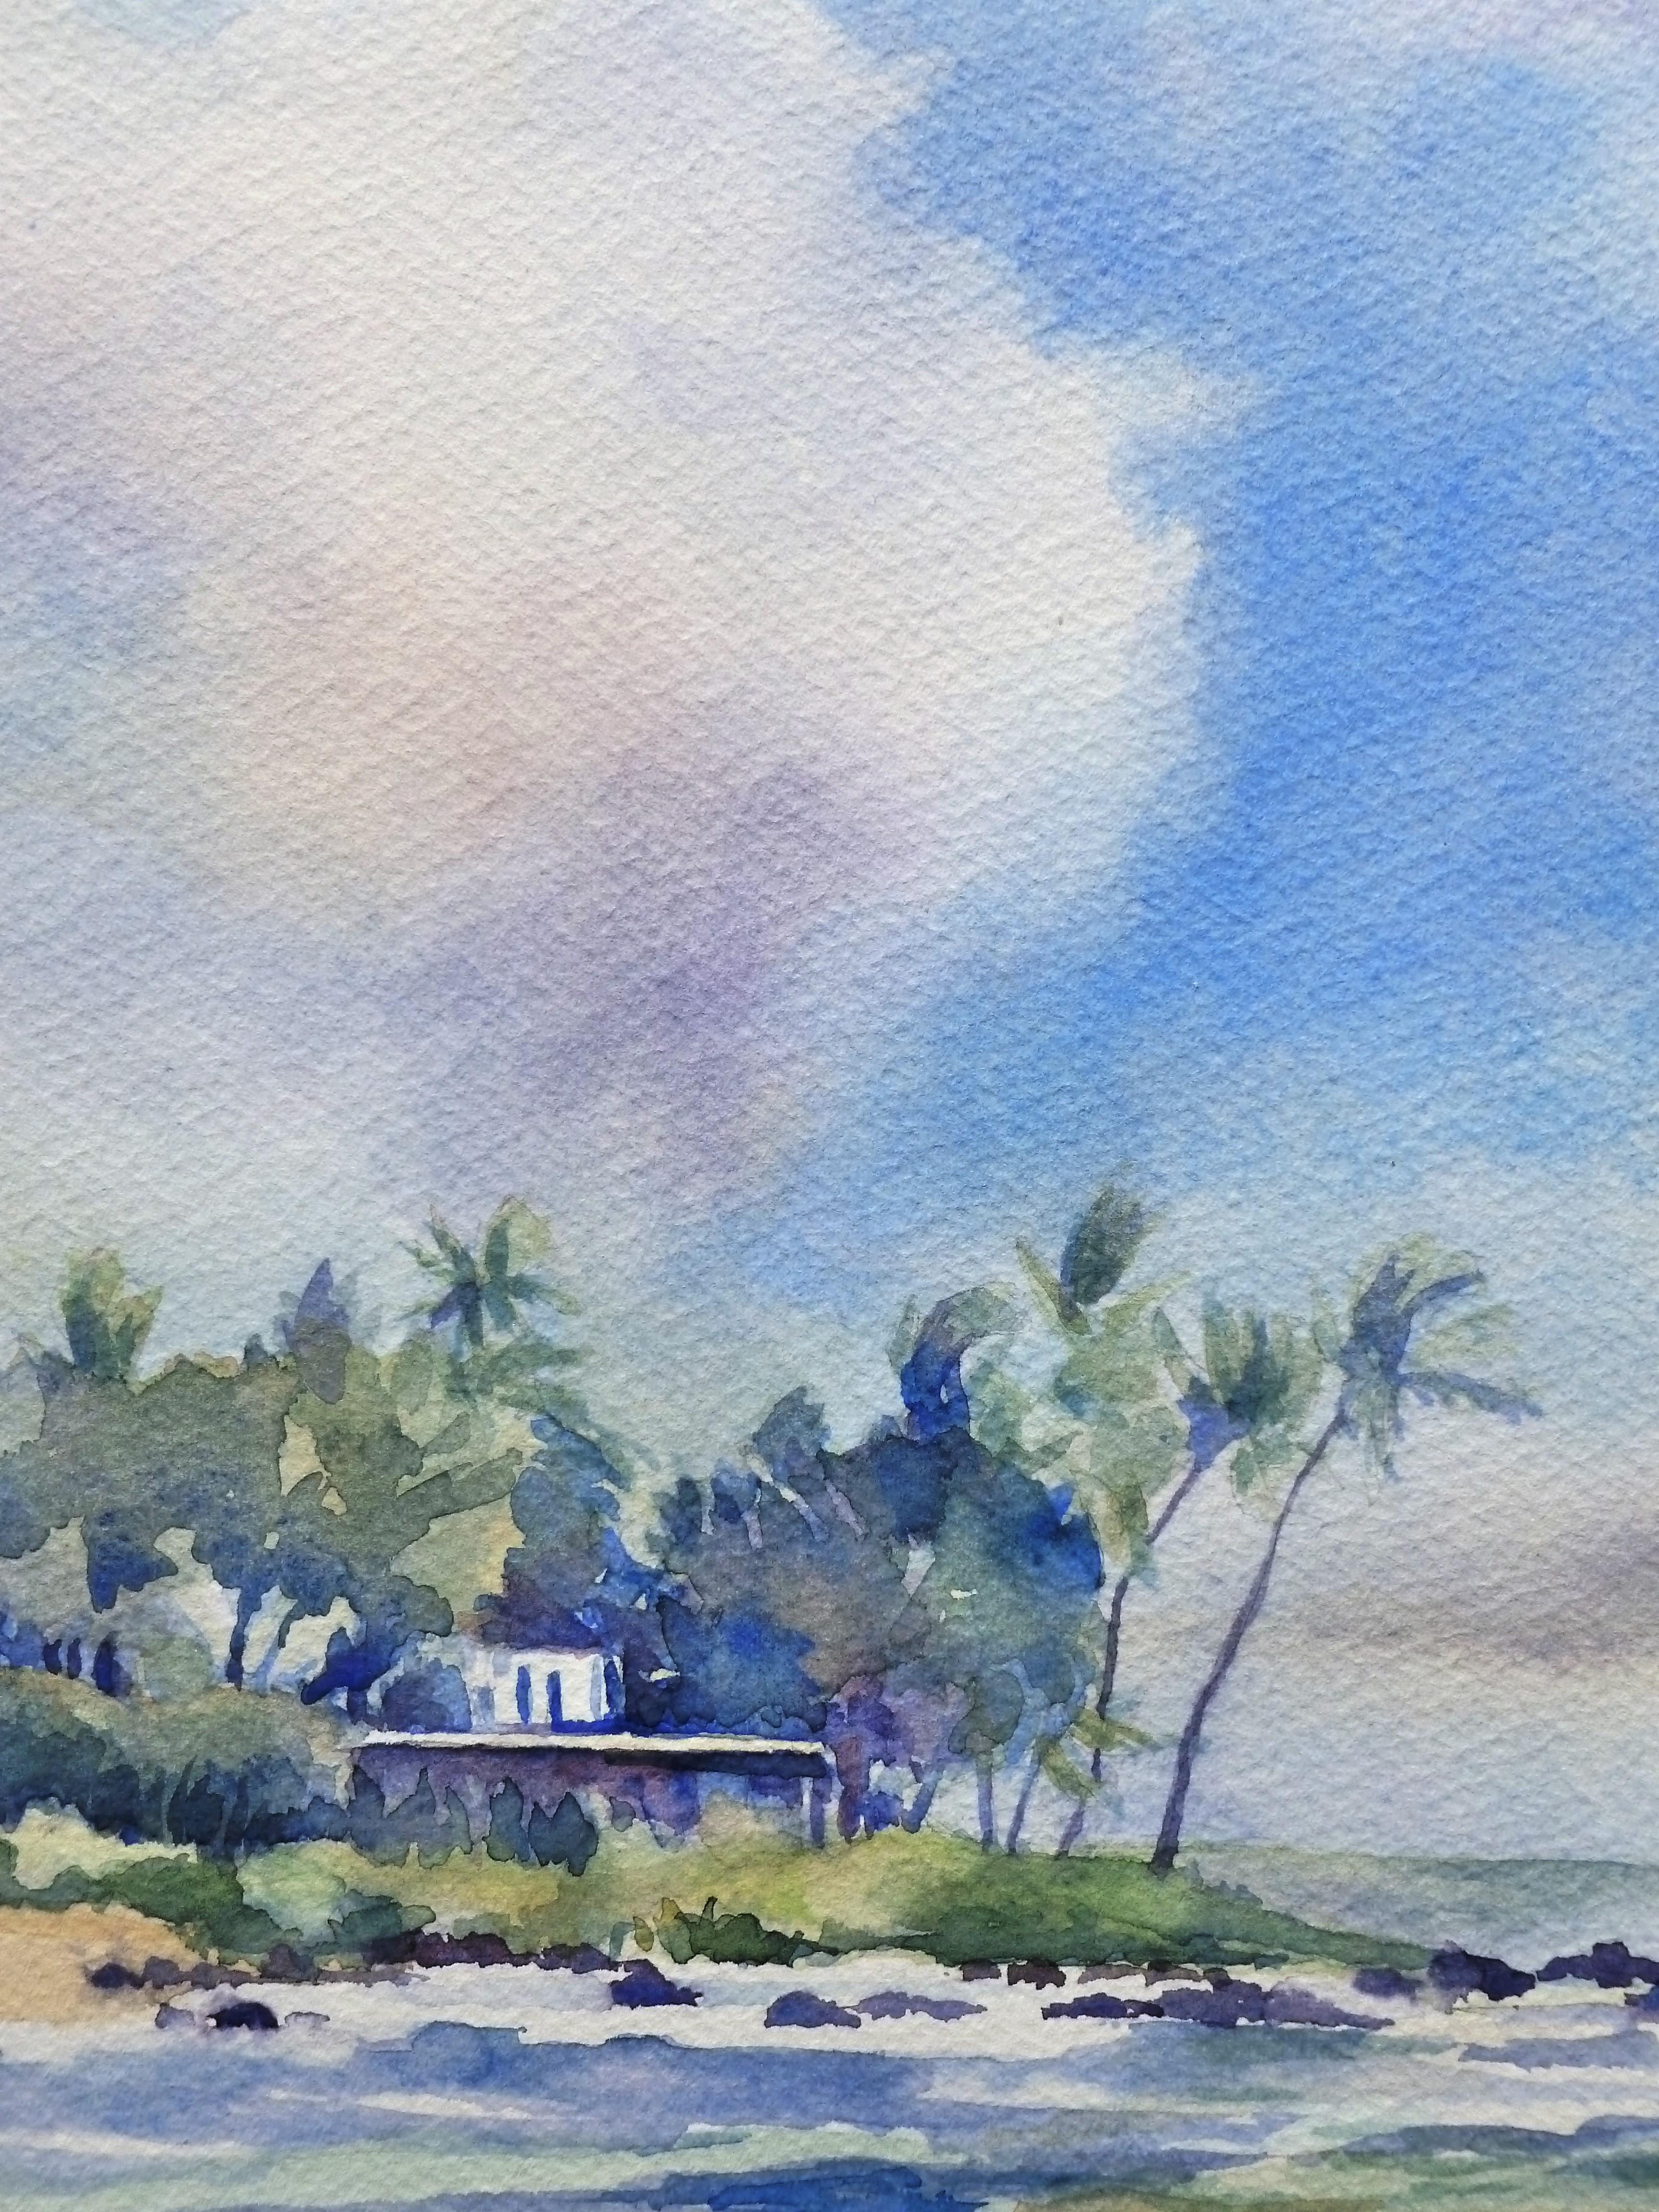 Kauai Catherine McCargar, Watercolor painting on paper 3